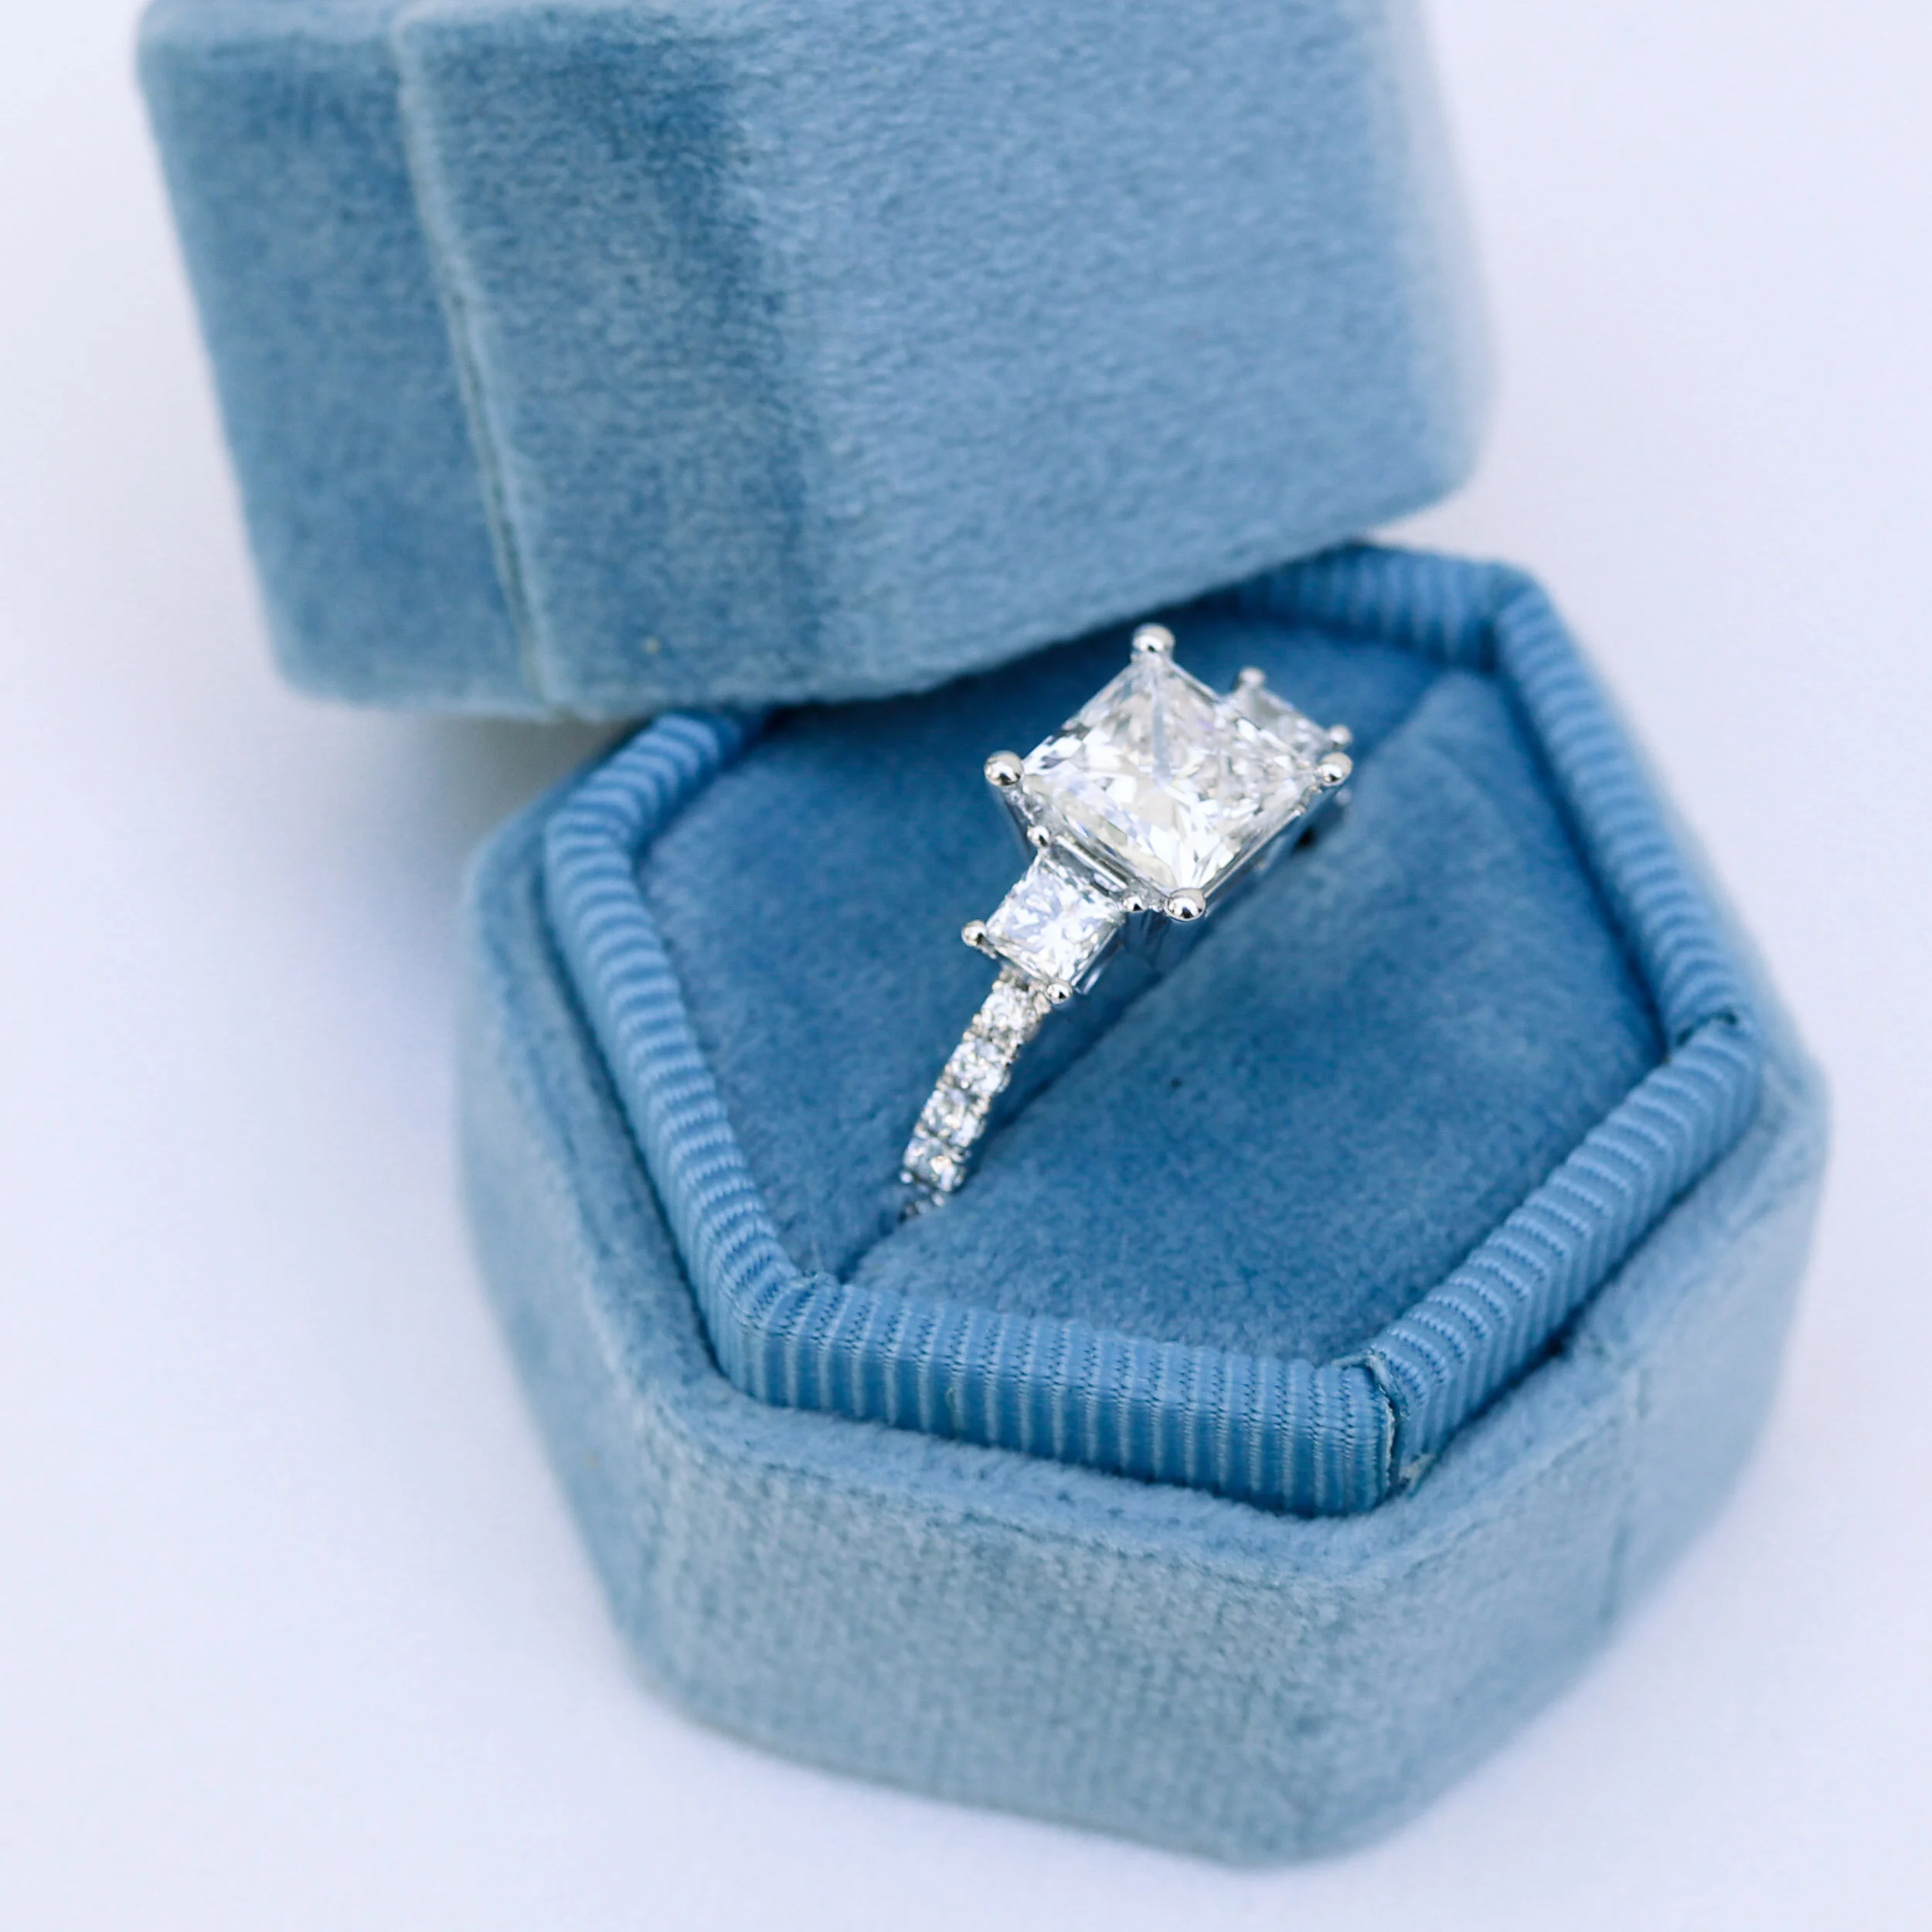 18k White Gold 1.5ct Princess Cut Three Stone Ring with Diamonds on the Band Ada Diamonds Design AD-477 Macro